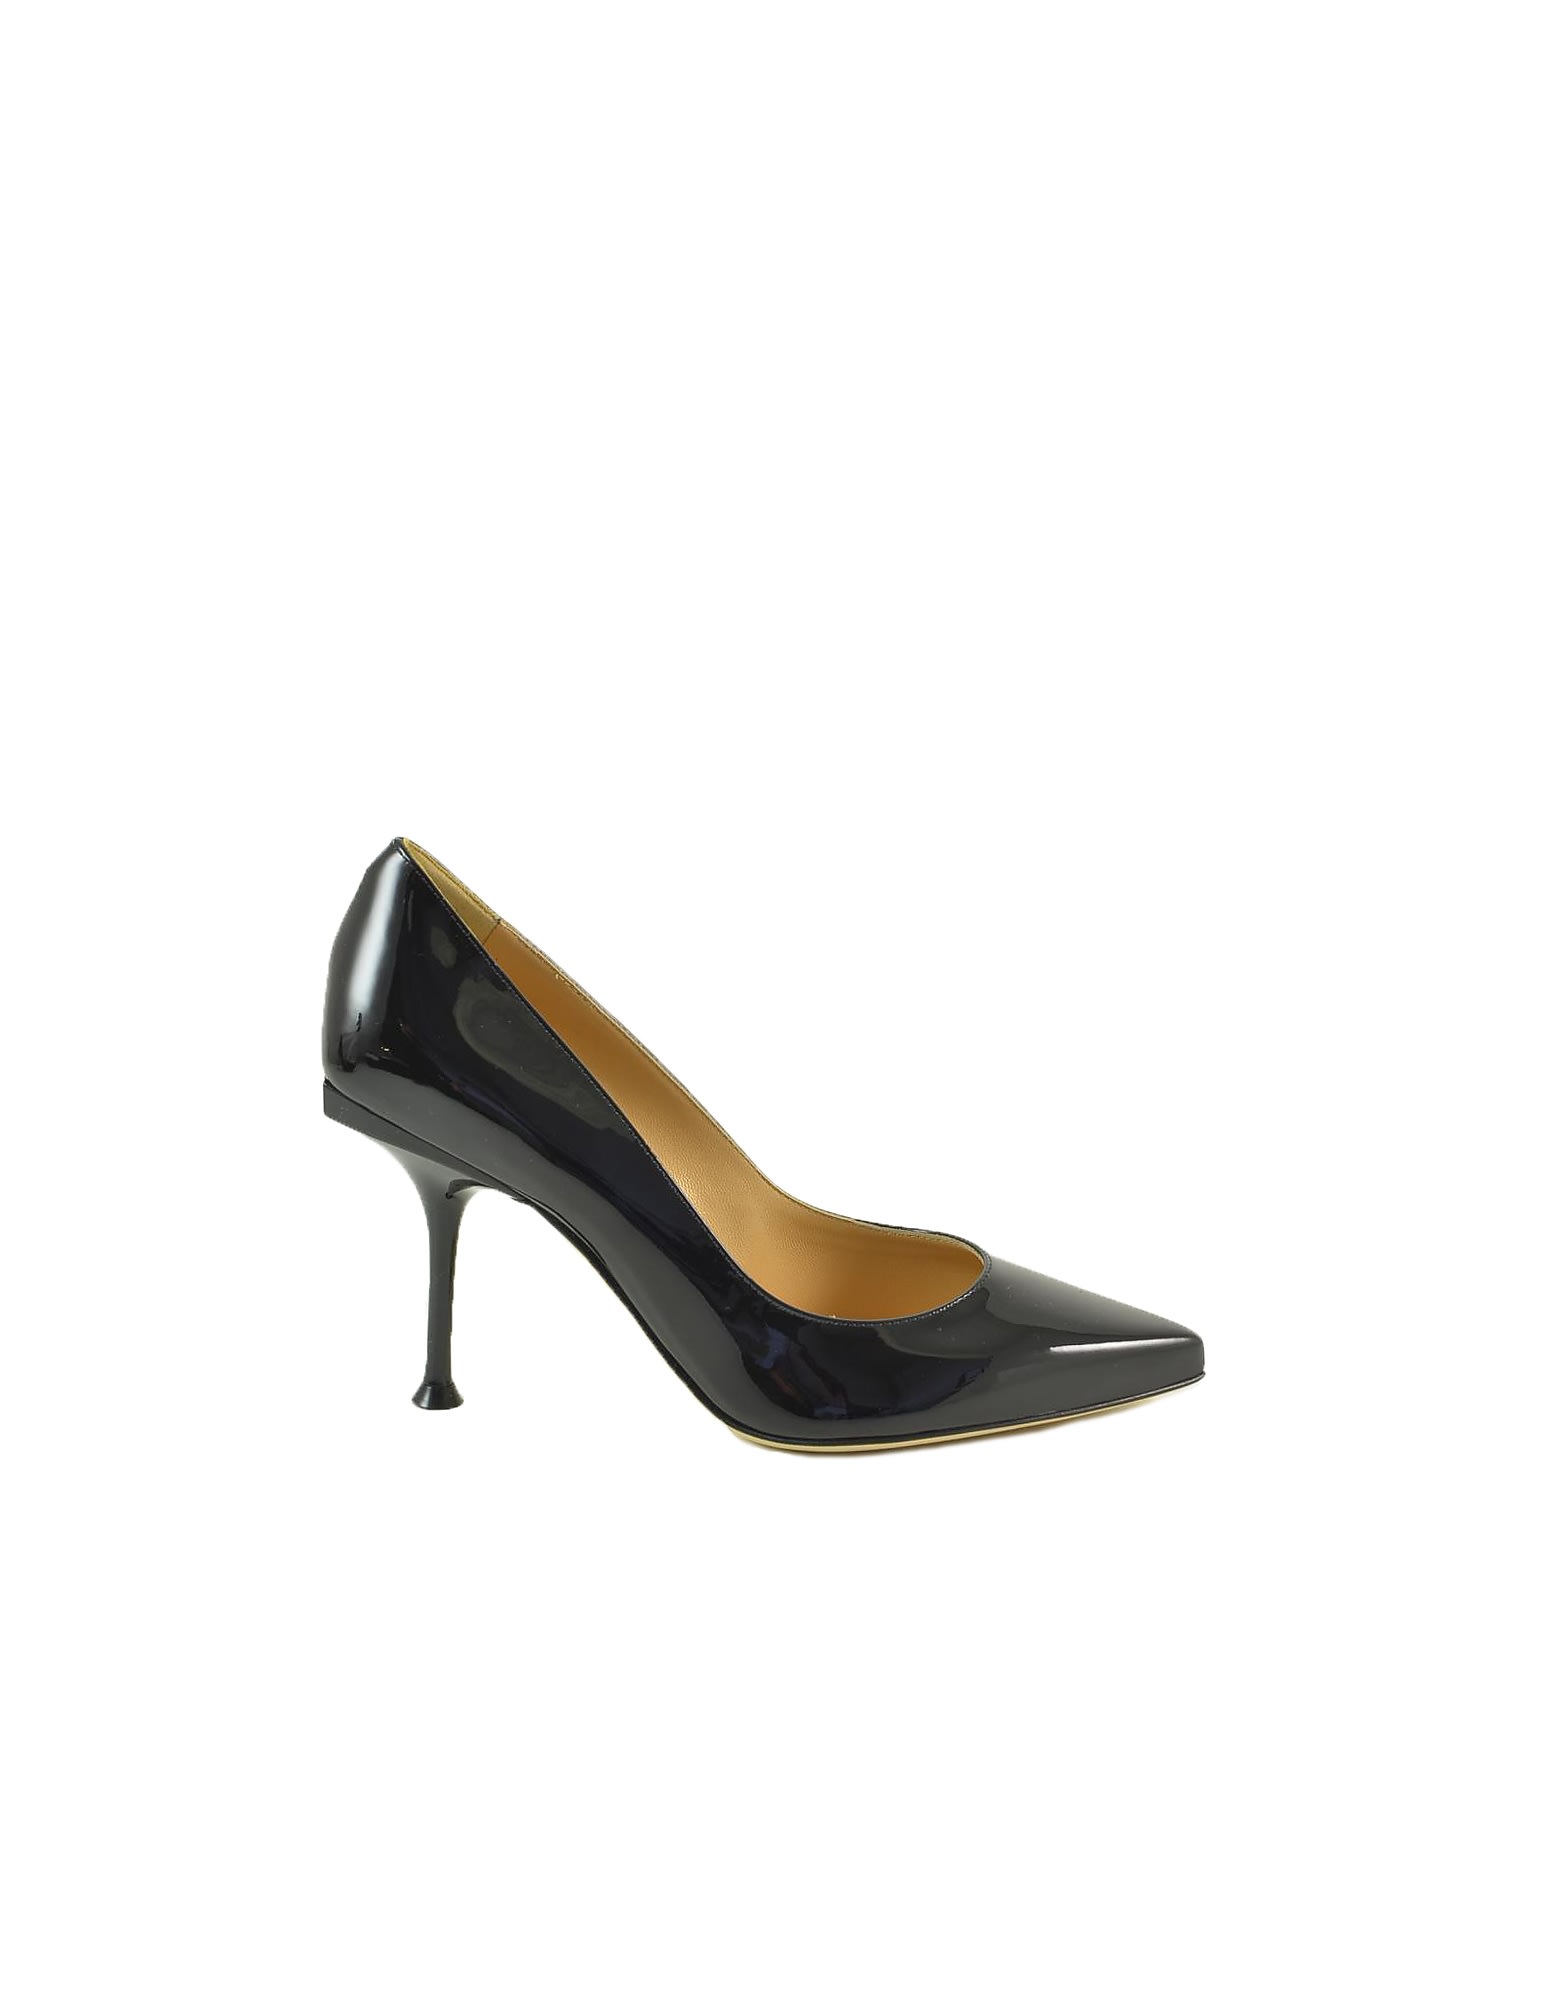 Sergio Rossi Black Shiny Patent Leather High-heel Pumps